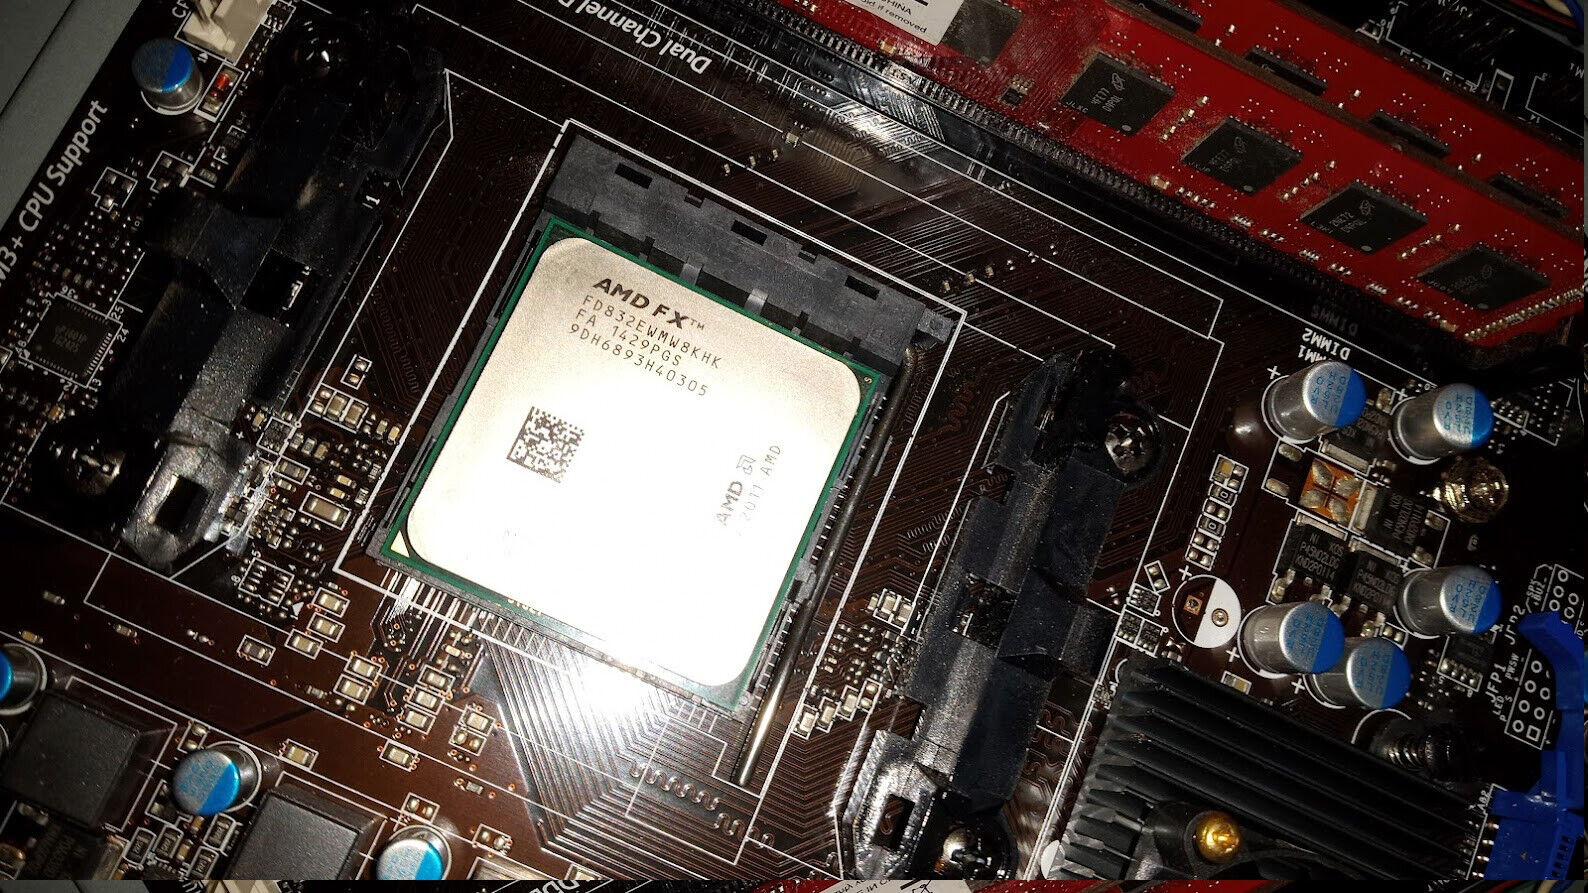 AMD FX-8320E FD832EWMW8KHK 3.2 to 4.2 GHz eight core socket AM3+ CPU Vishera 95W